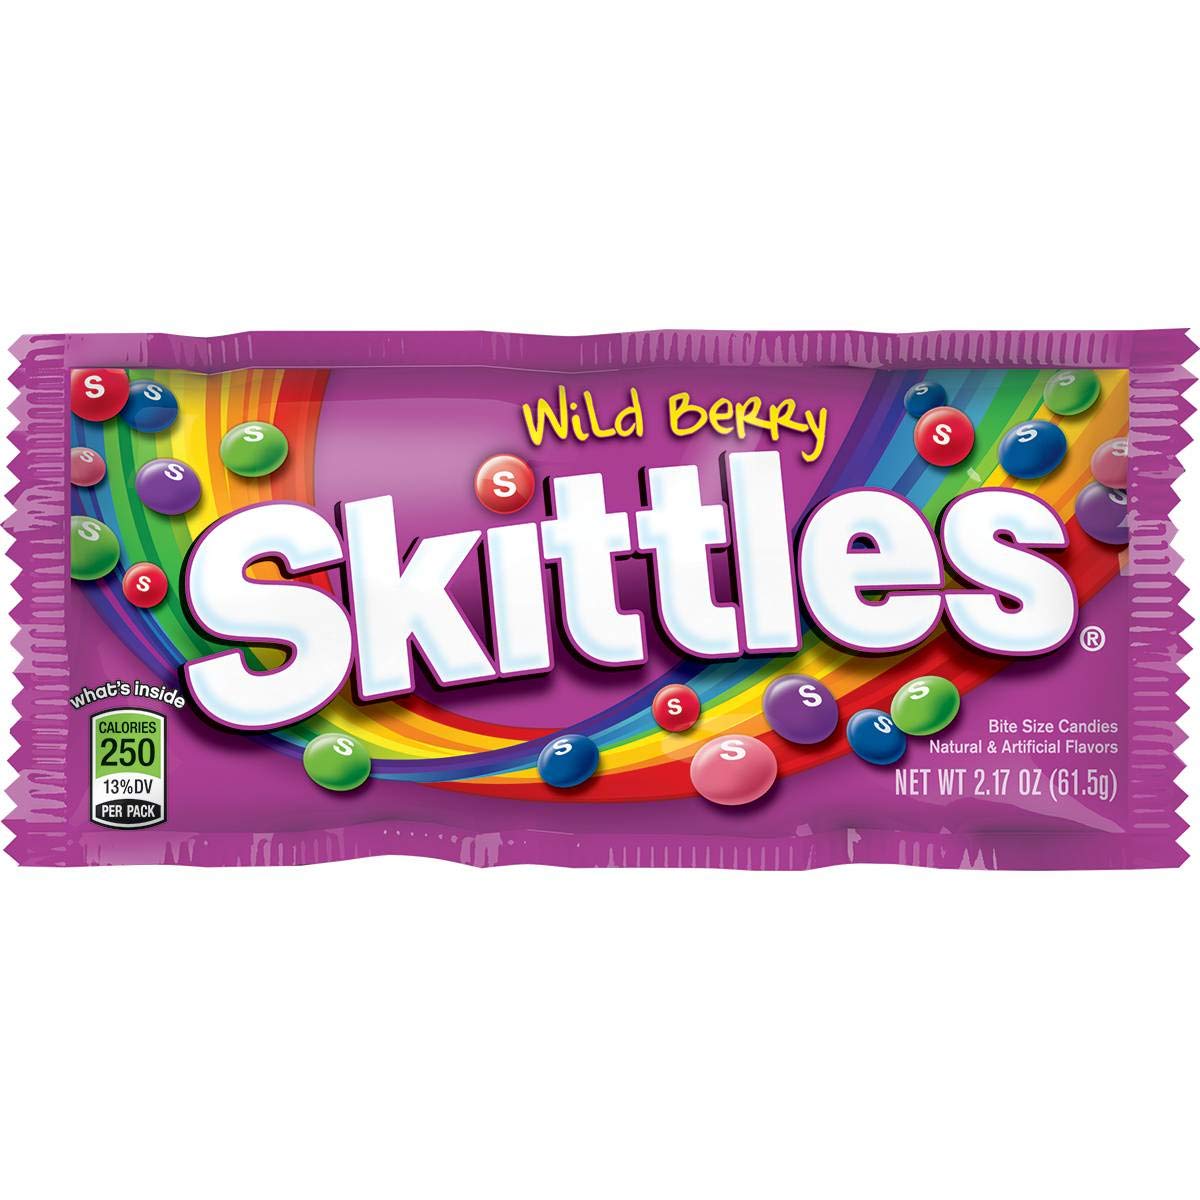 Skittles wildberry 